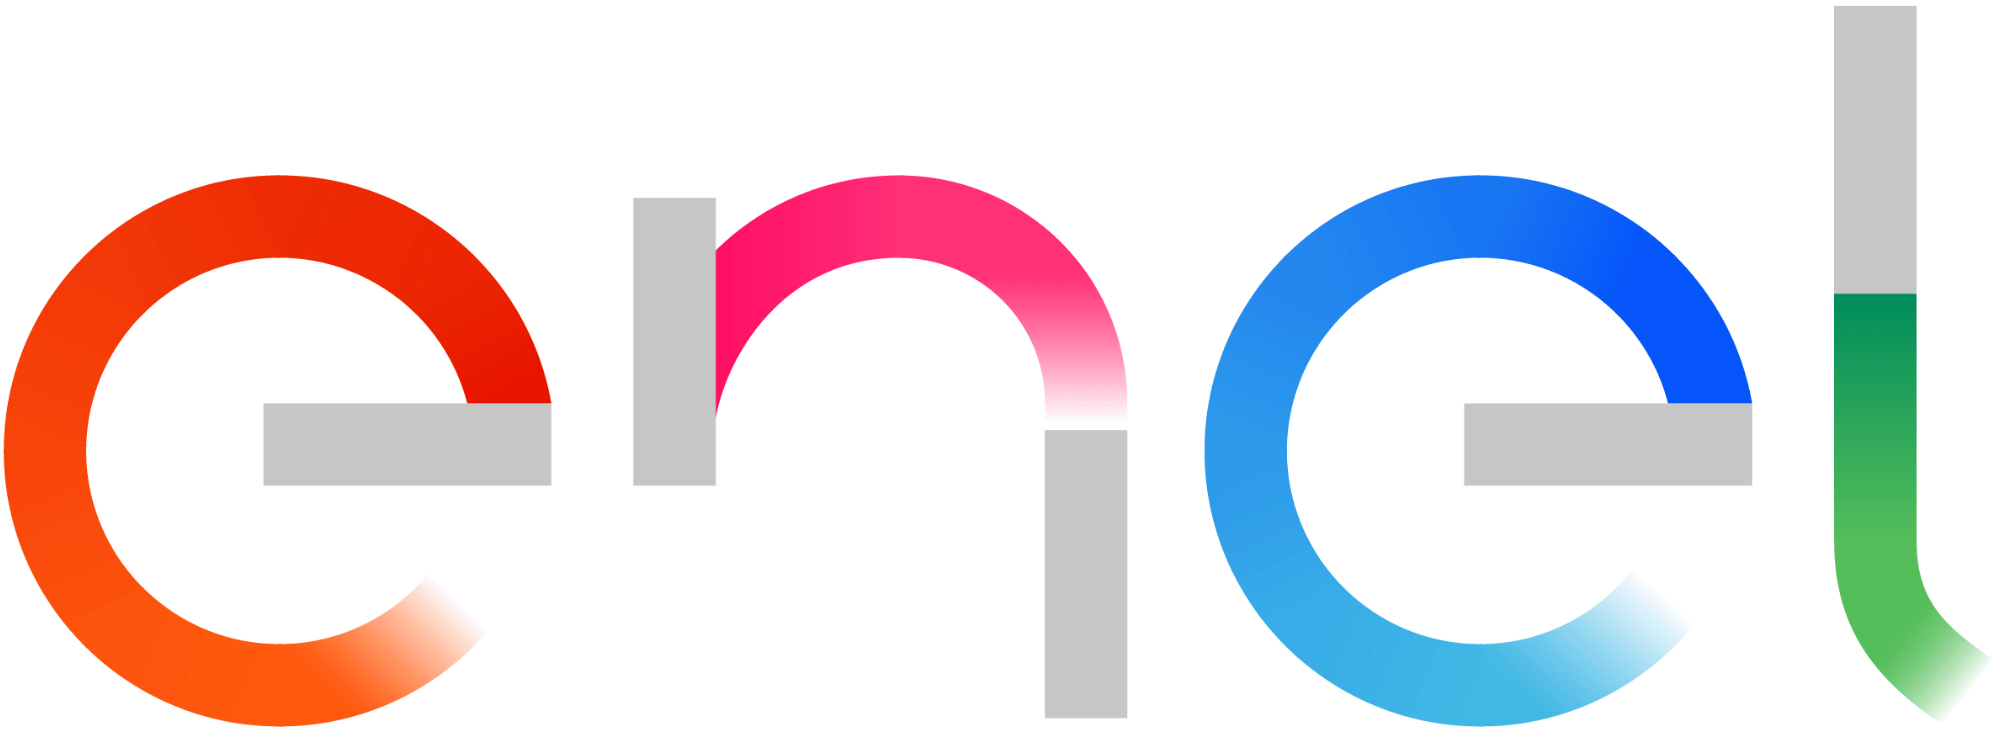 orter_logos/enel company logo